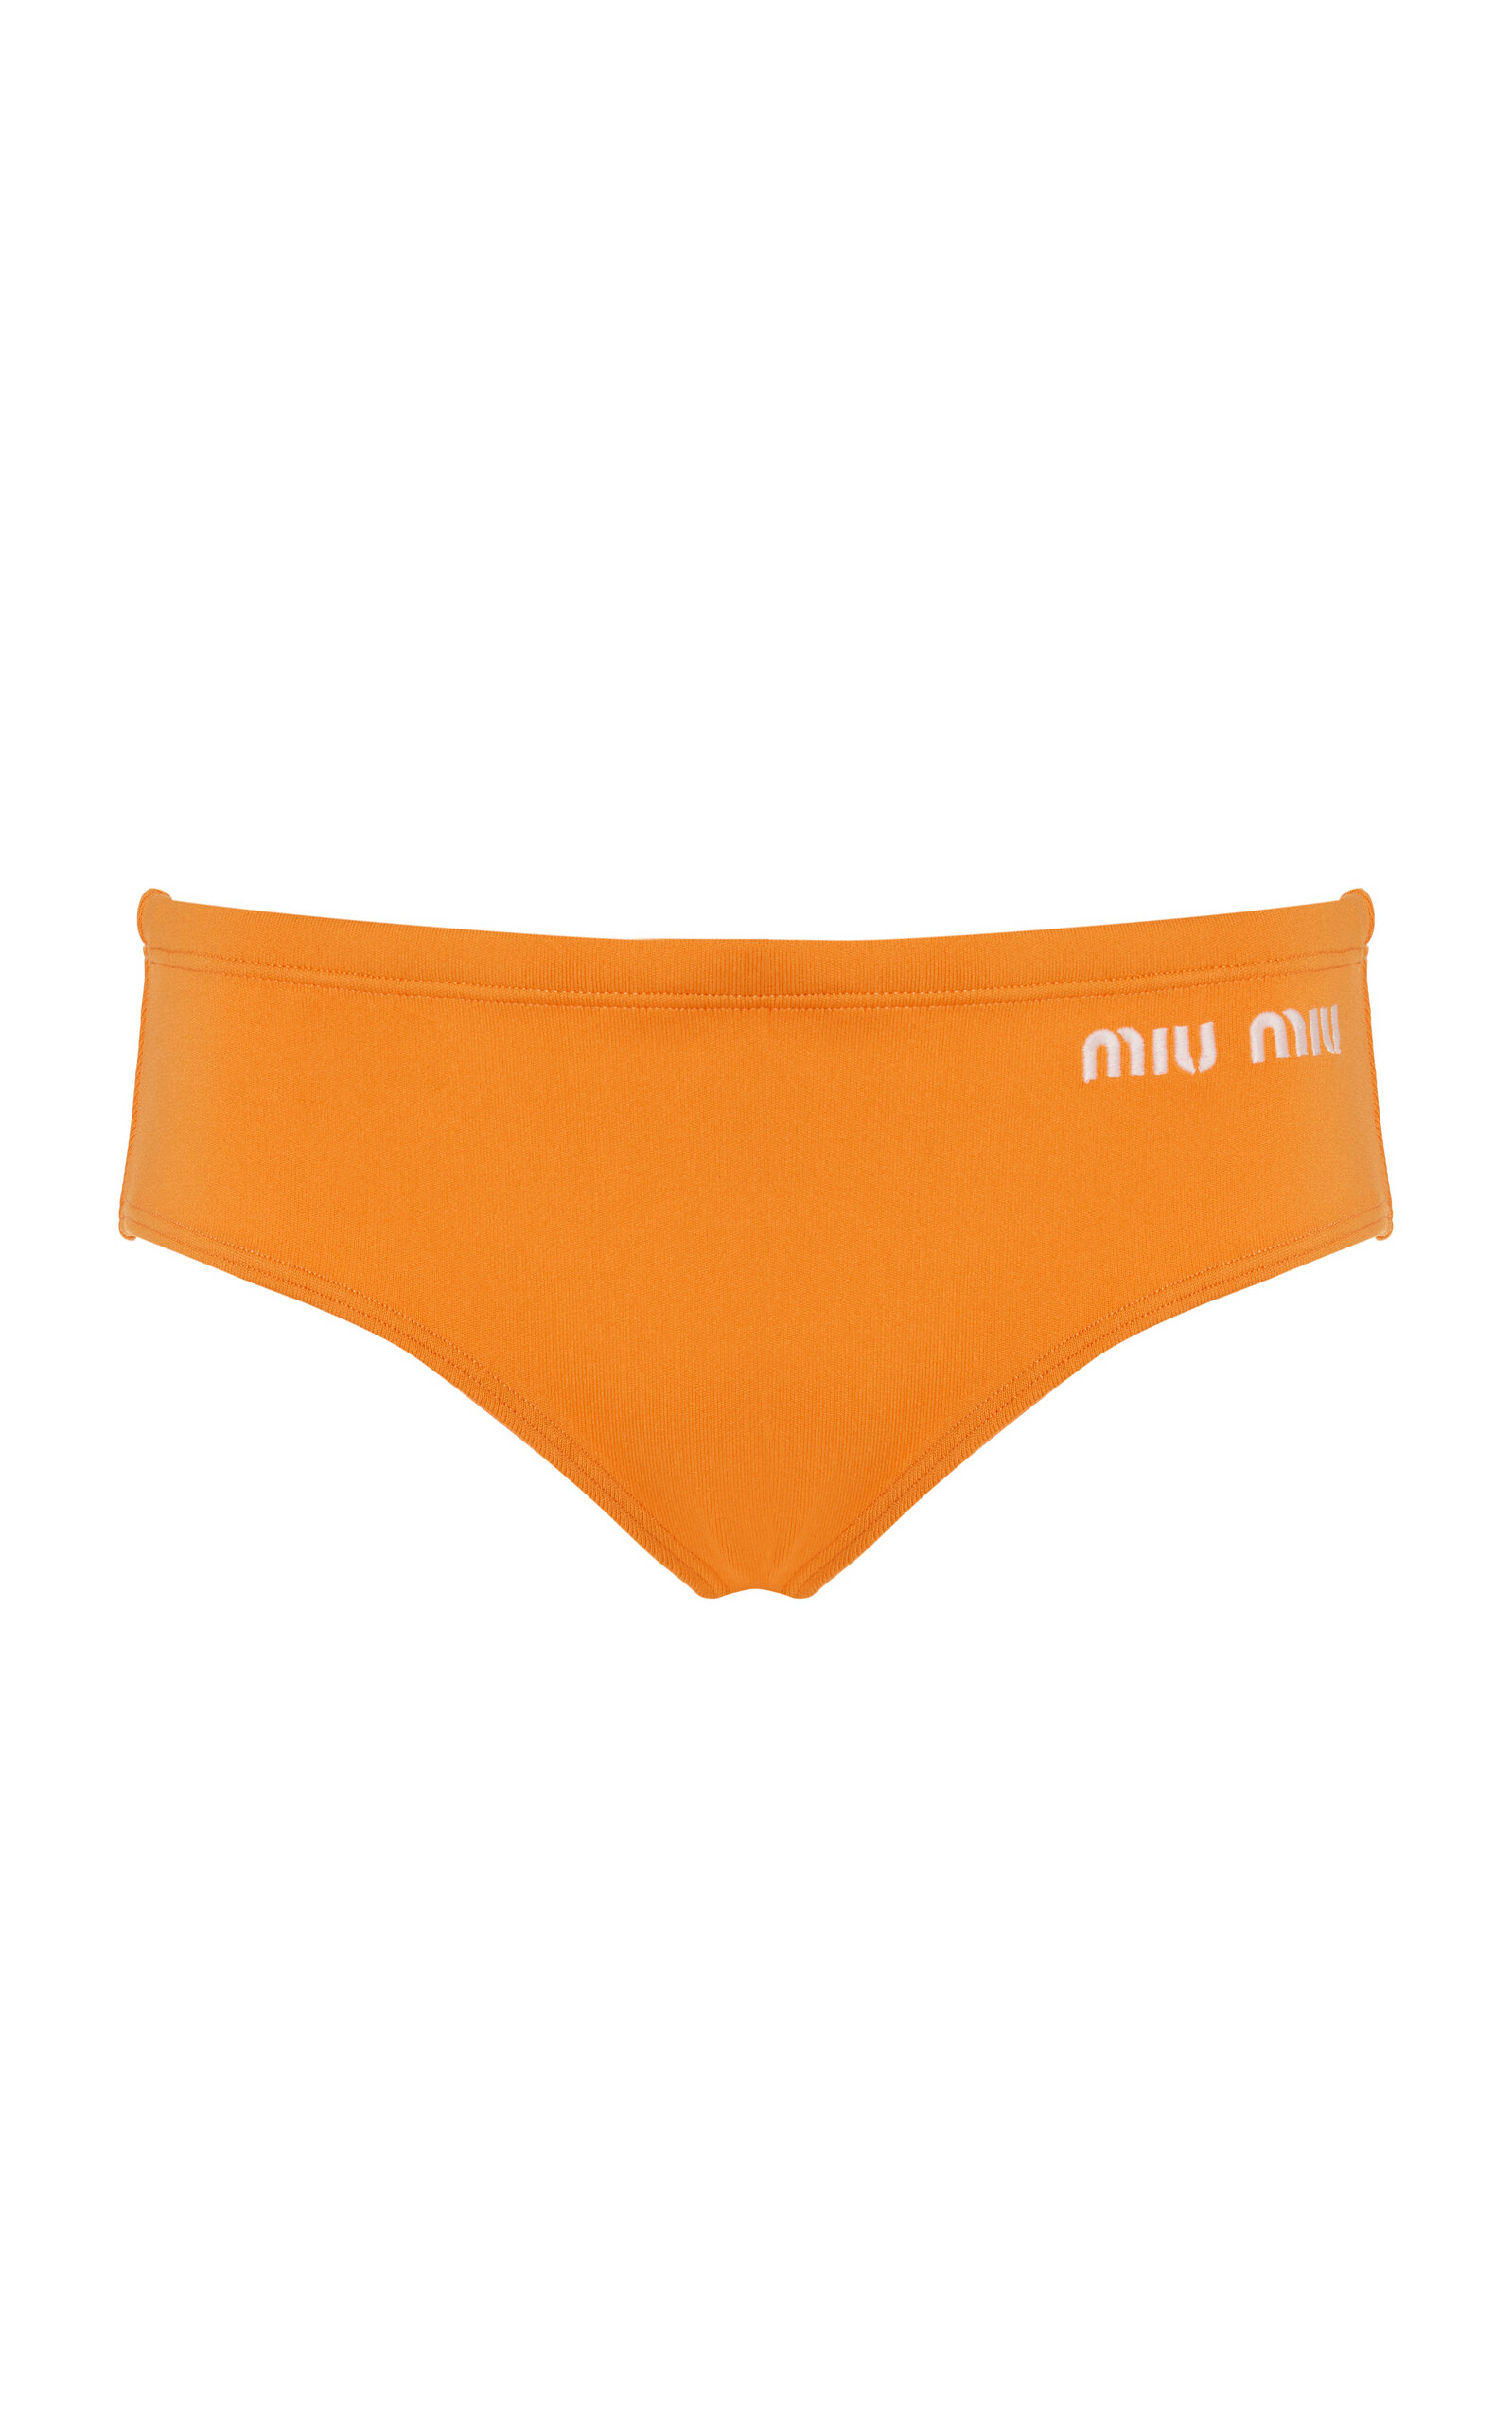 Miu Miu ribbed-knit logo culotte briefs